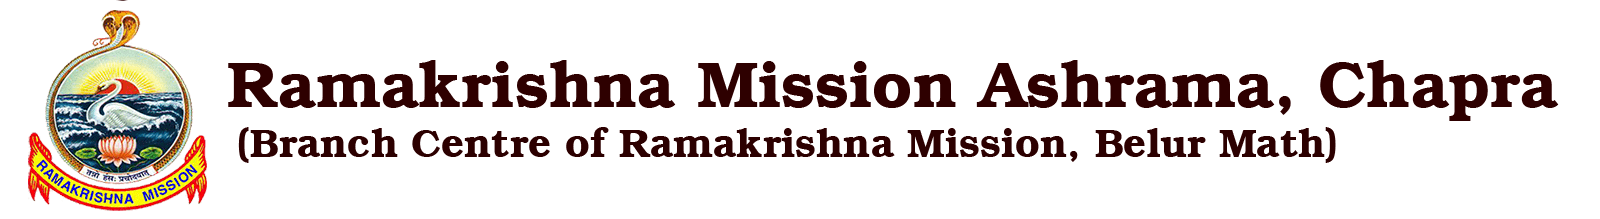 Ramakrishna Mission Ashrama, Chapra